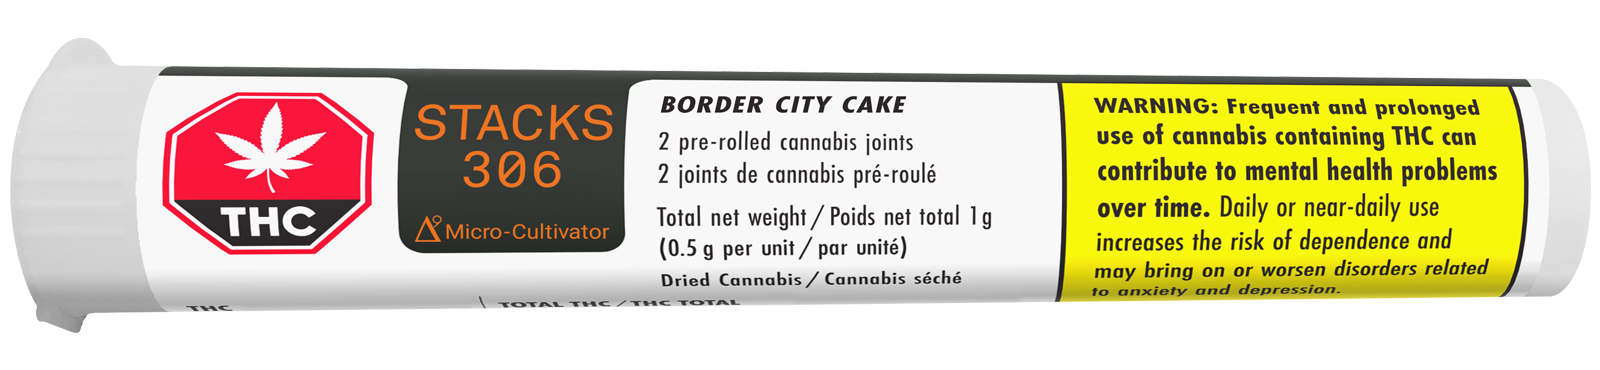 Stacks 306 - Pre-Rolled Border City Cake